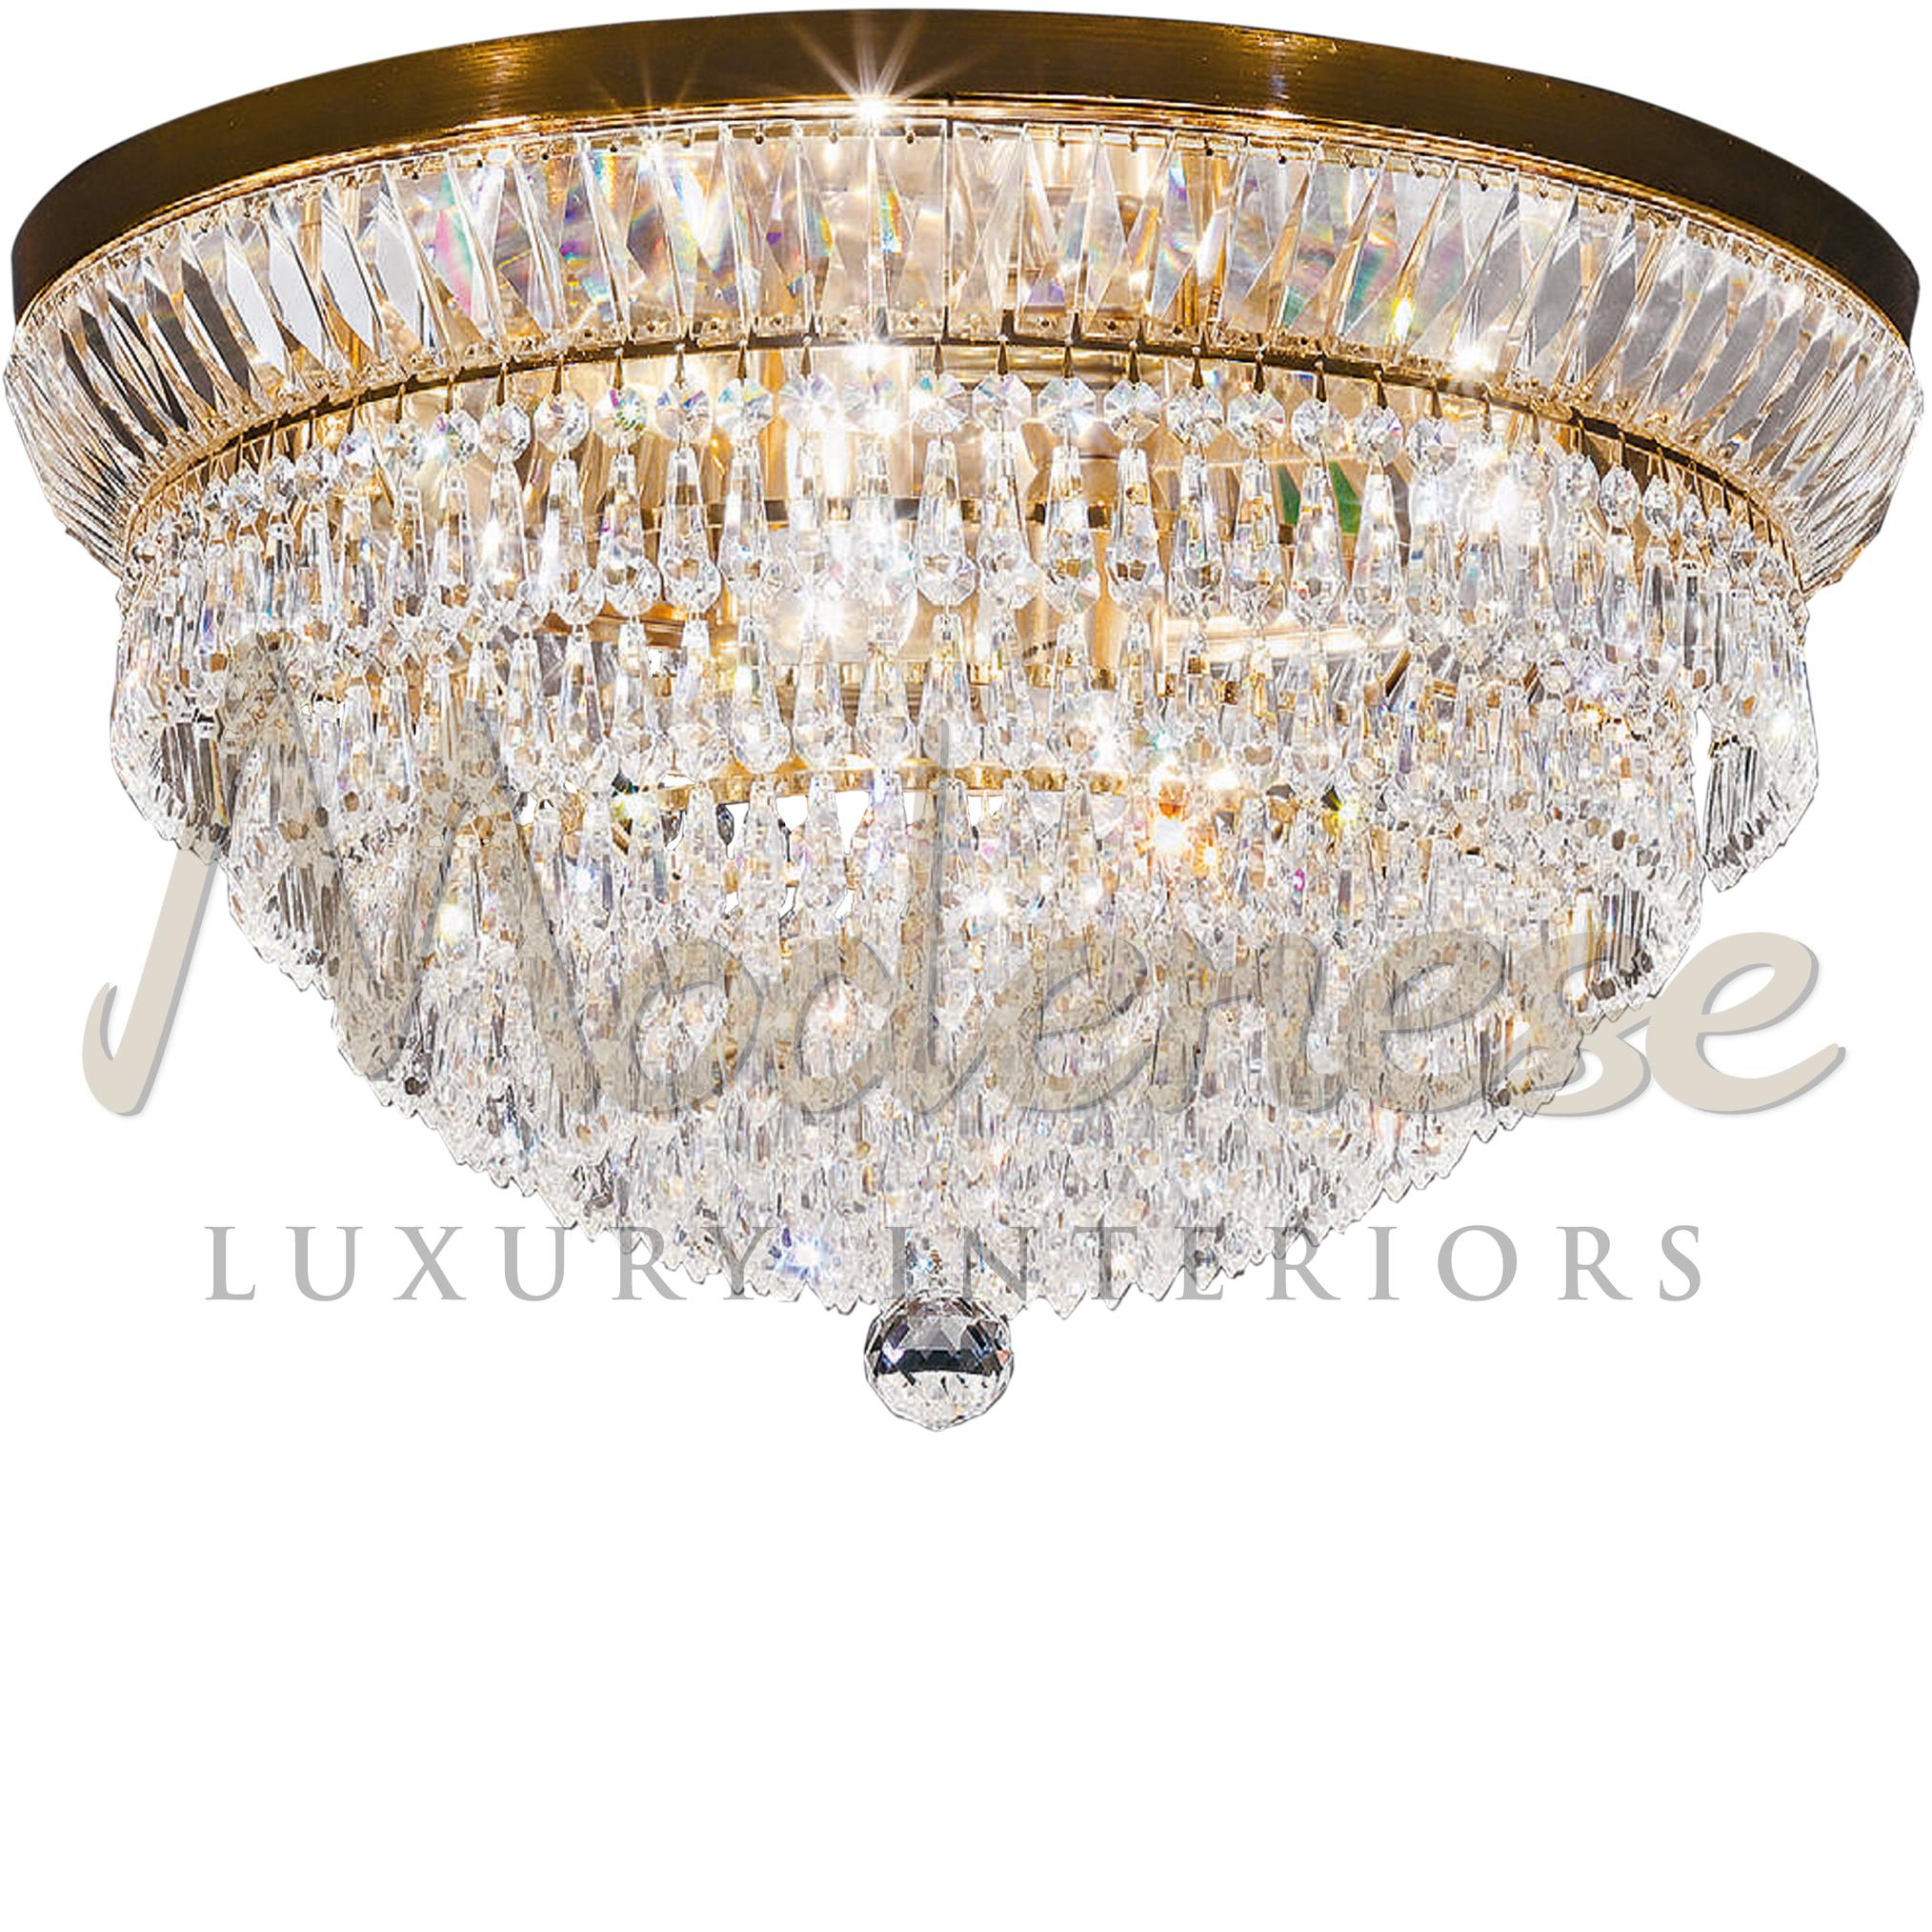 Baroque Glamorous 8-Lights Ceiling Lamp in 24kt Gold Finishing & Scholer Crystal Pendant For Sale